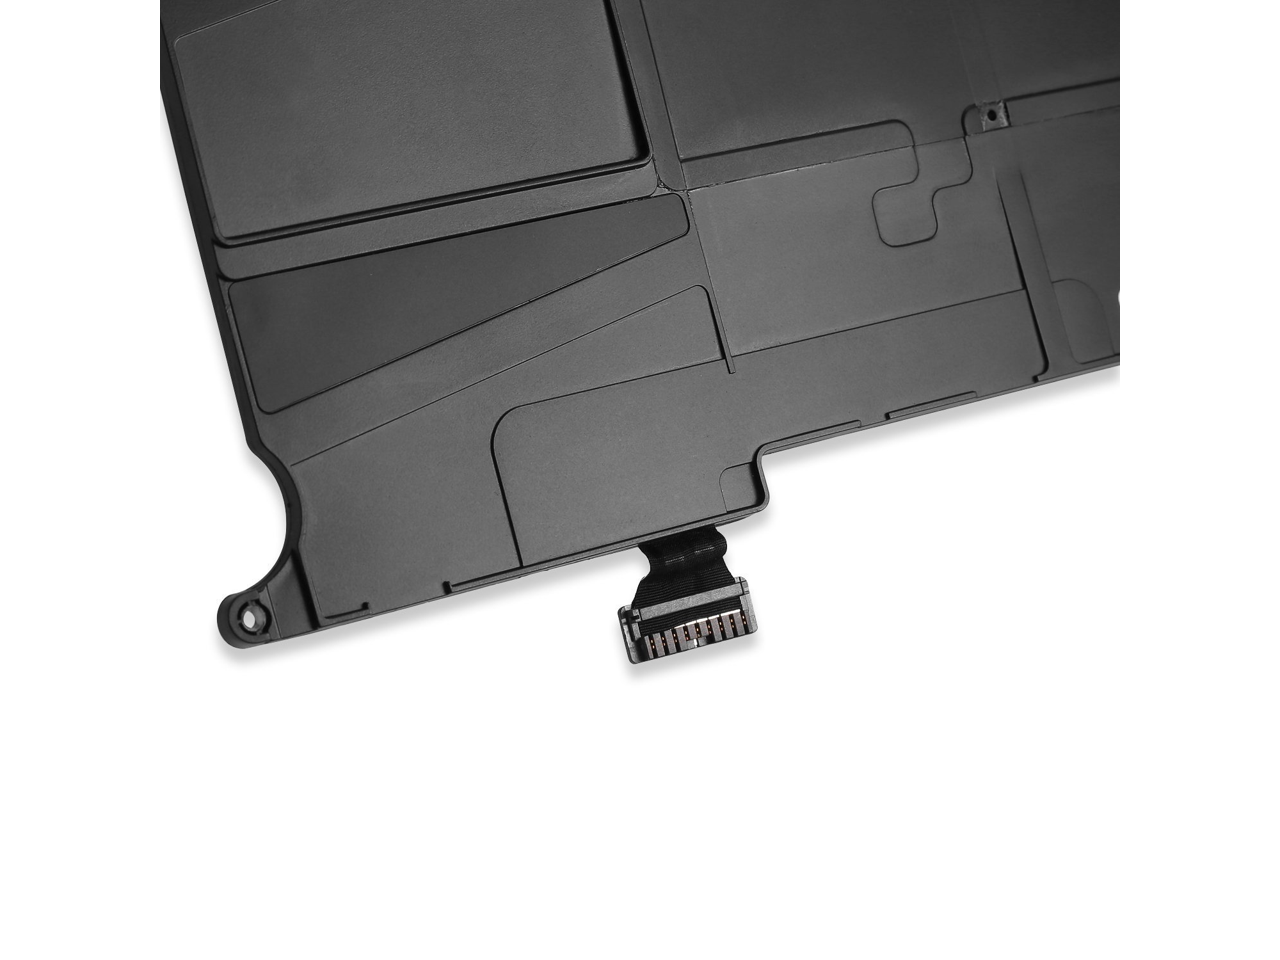 macbook air 11 inch 2012 battery